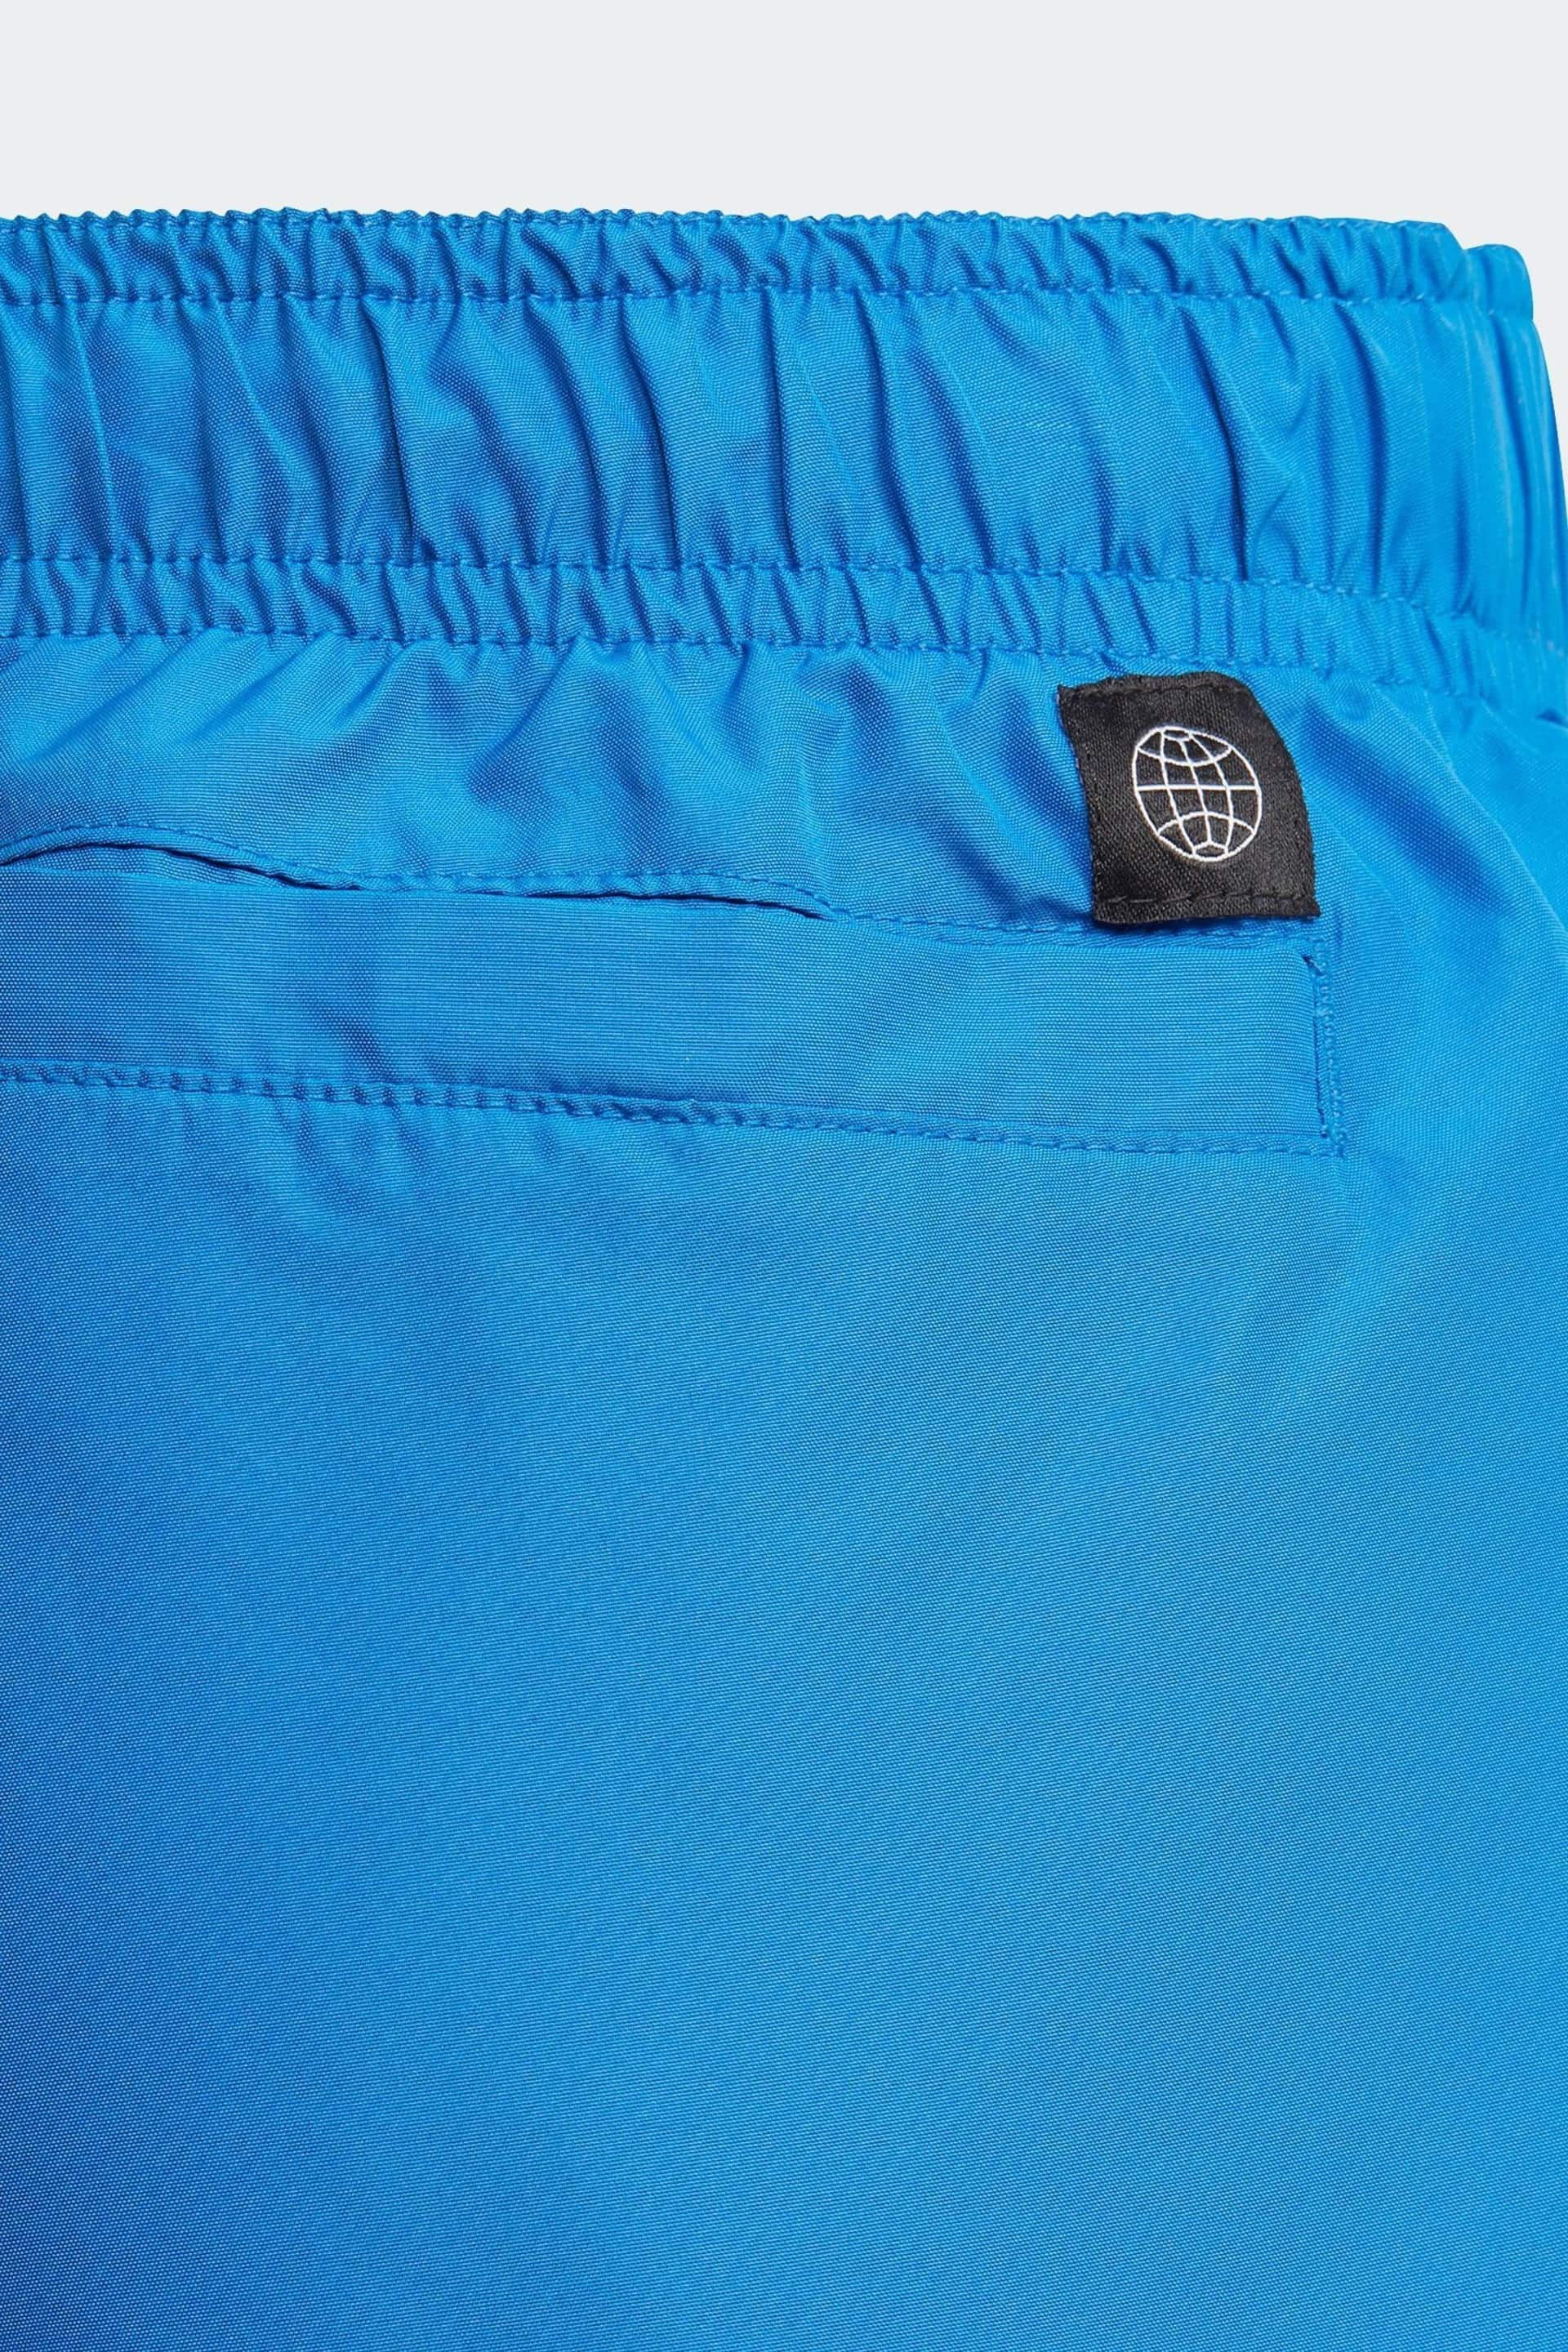 adidas Bright Blue Classic Badge Of Sport Swim Shorts - Image 3 of 5